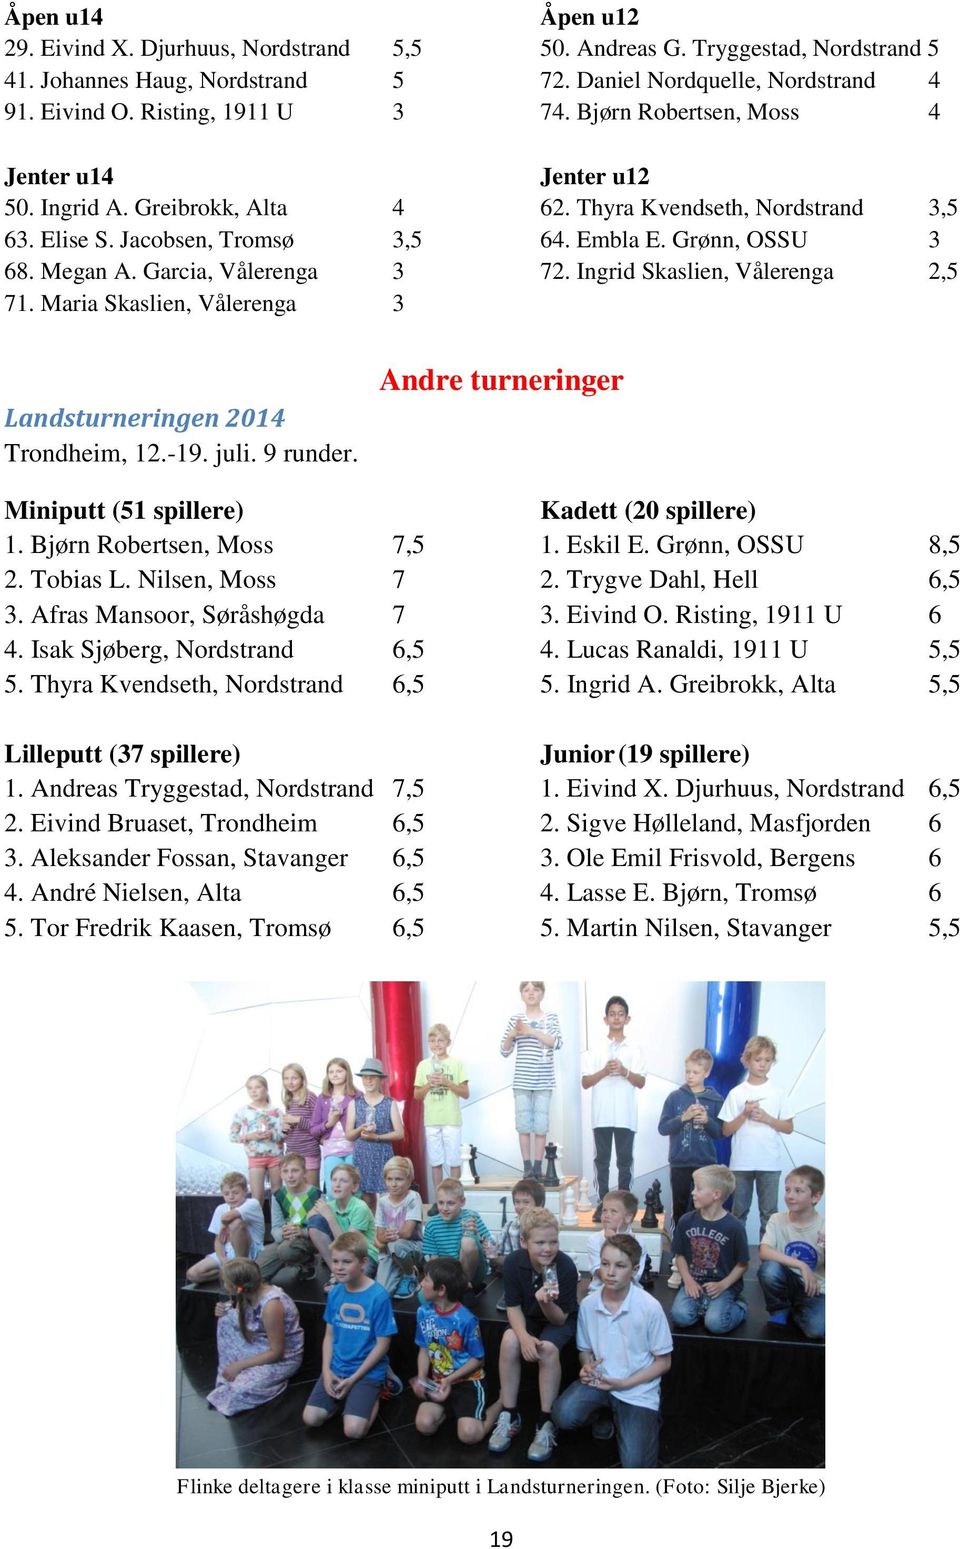 Thyra Kvendseth, Nordstrand 3,5 64. Embla E. Grønn, OSSU 3 72. Ingrid Skaslien, Vålerenga 2,5 Landsturneringen 2014 Trondheim, 12.-19. juli. 9 runder. Andre turneringer Miniputt (51 spillere) 1.